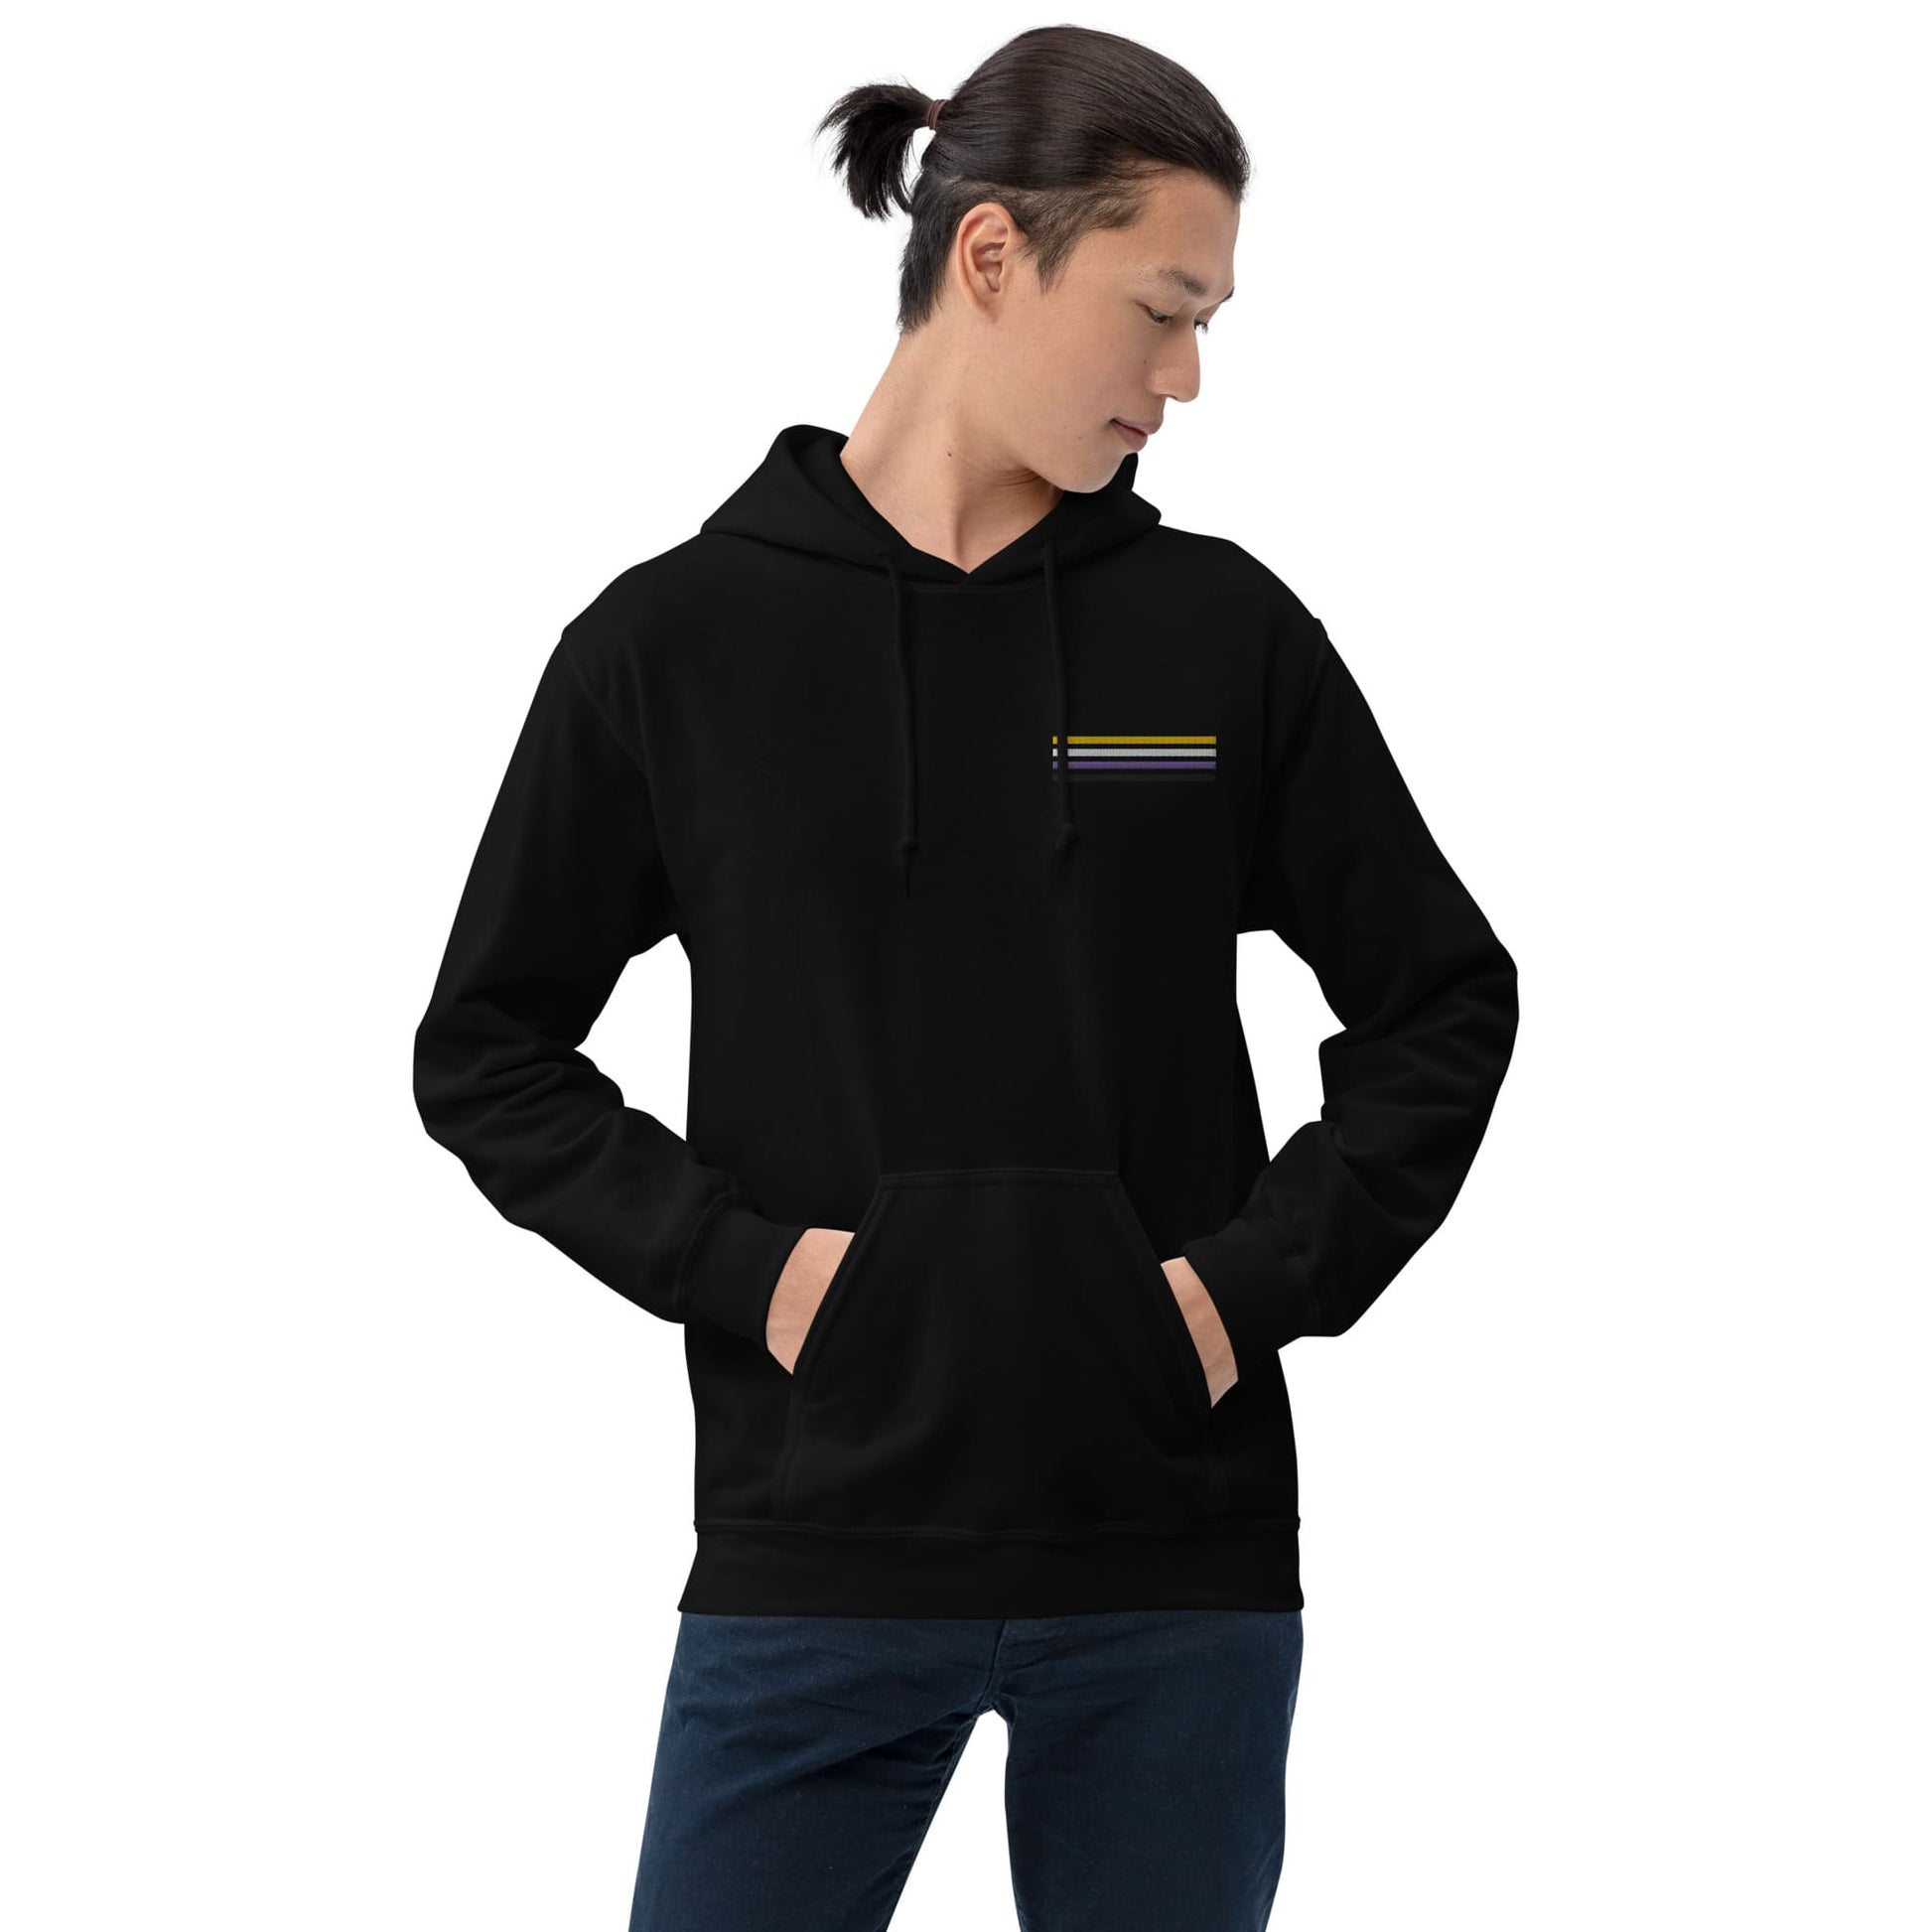 nonbinary hoodie, subtle enby pride flag embroidered pocket design hooded sweatshirt, model 1